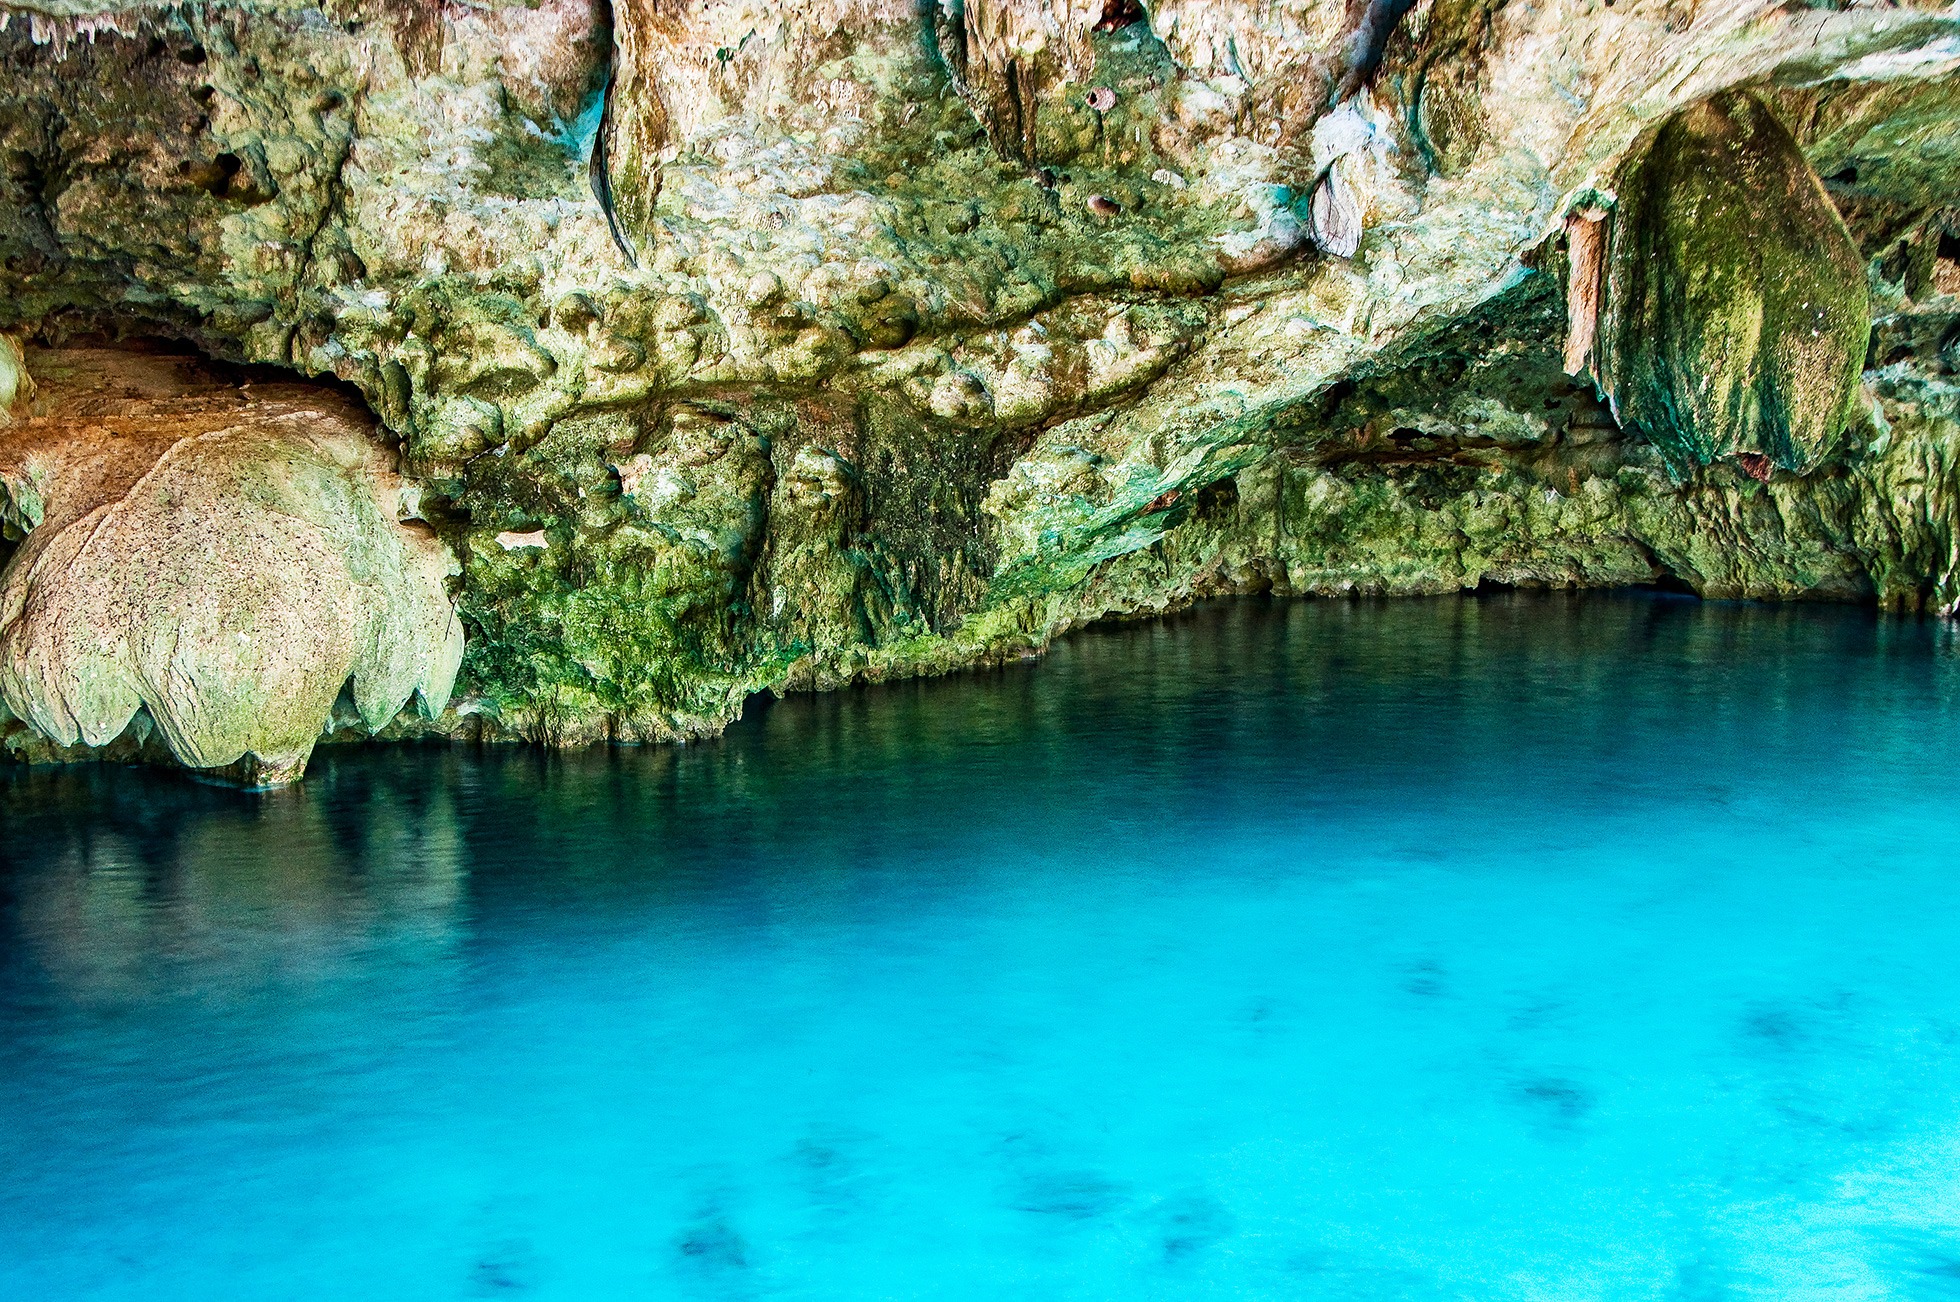 Awaken your inner mermaid at Cenote Dos Ojos in Mexico